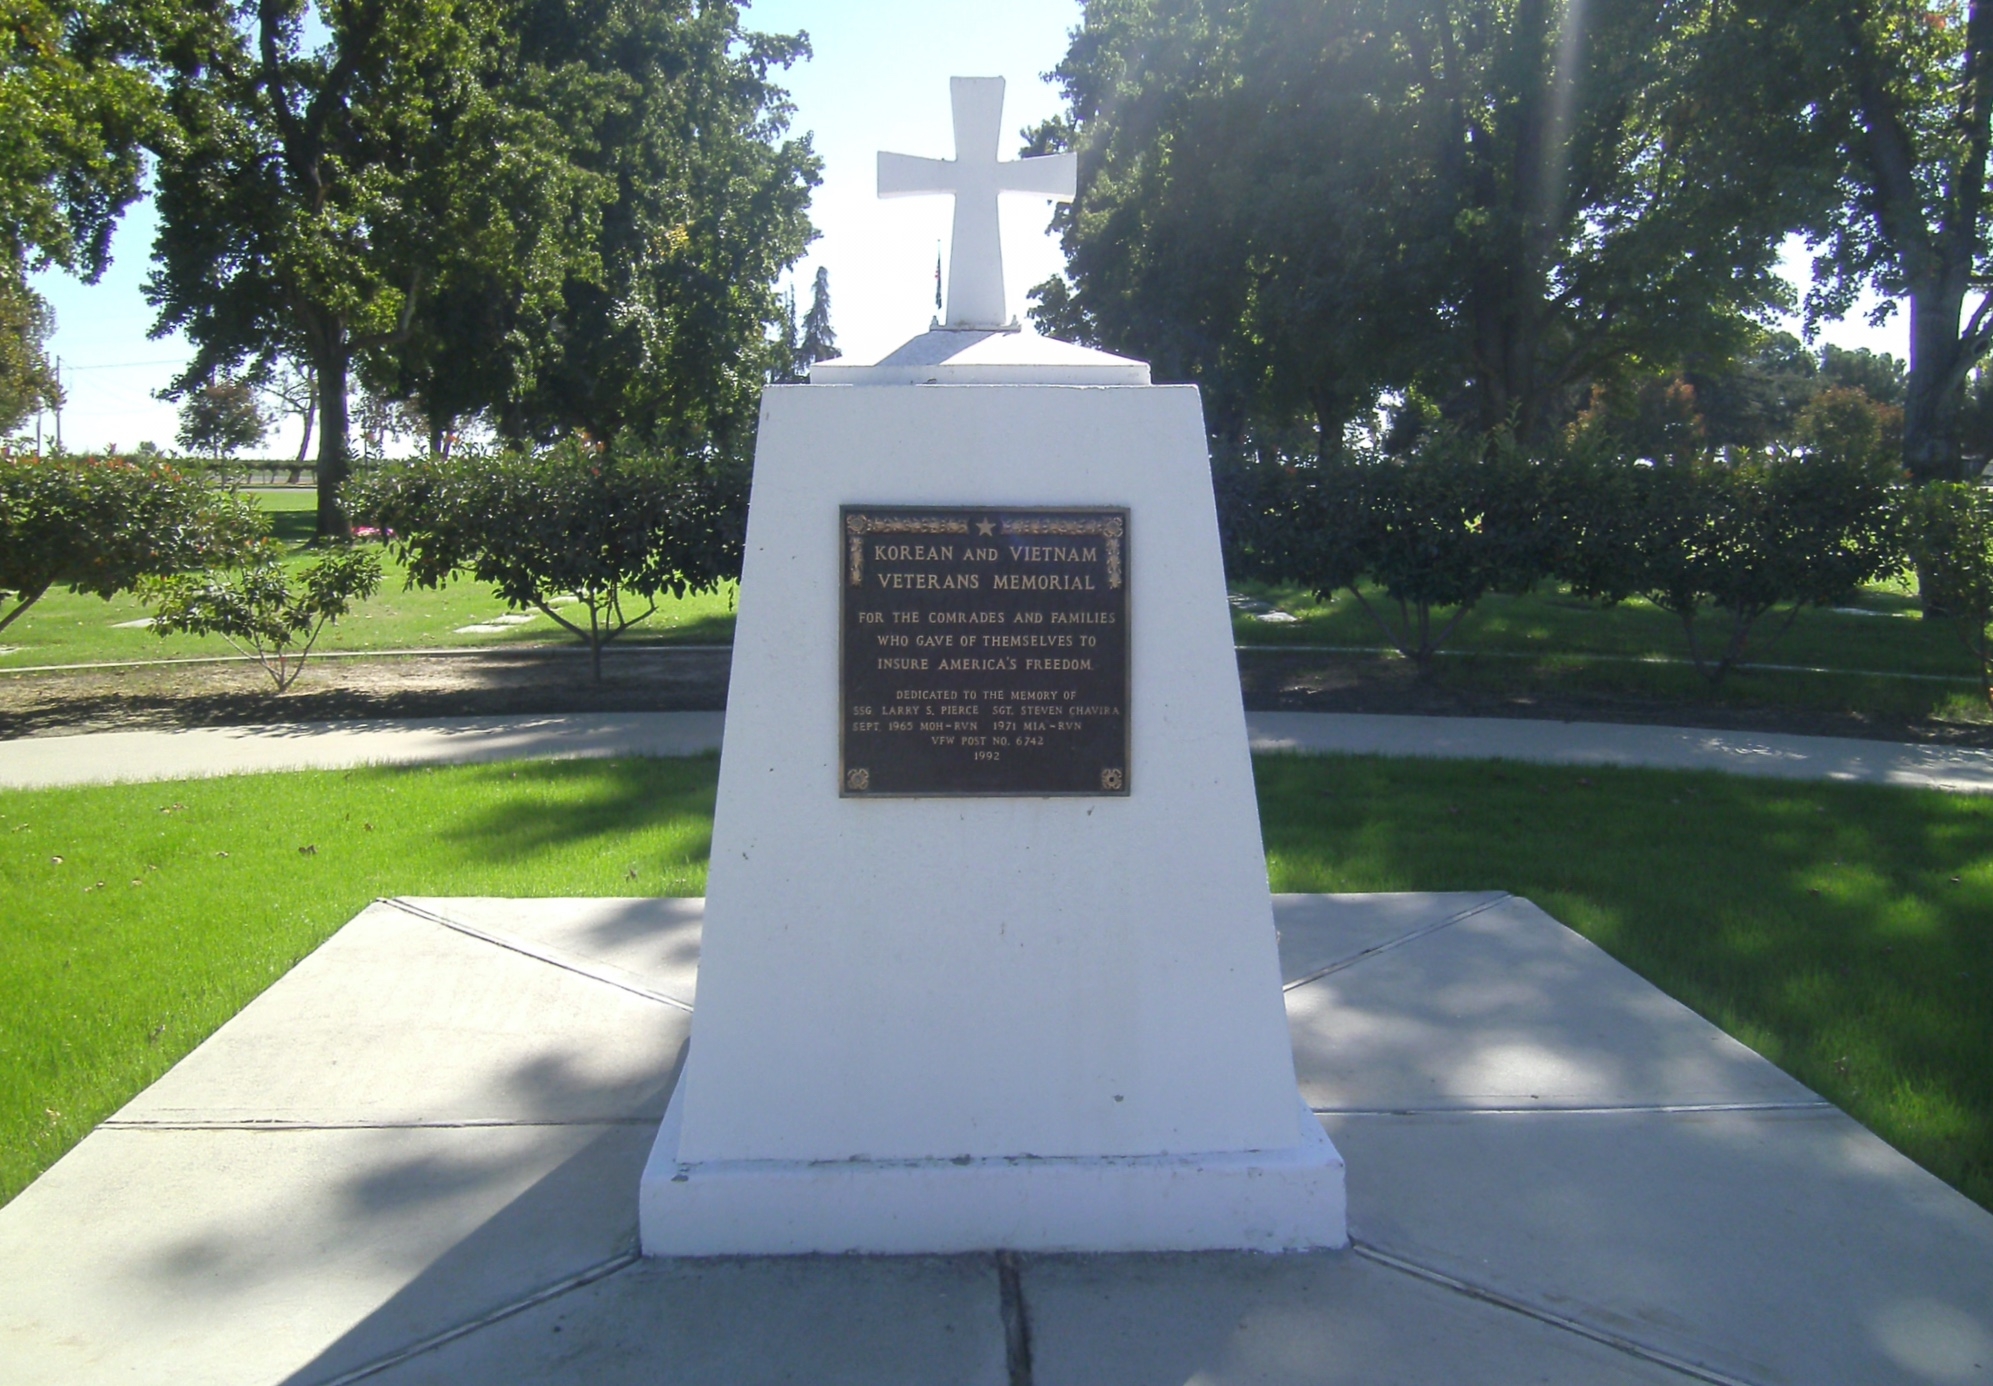 Korean and Vietnam Veterans Memorial Marker